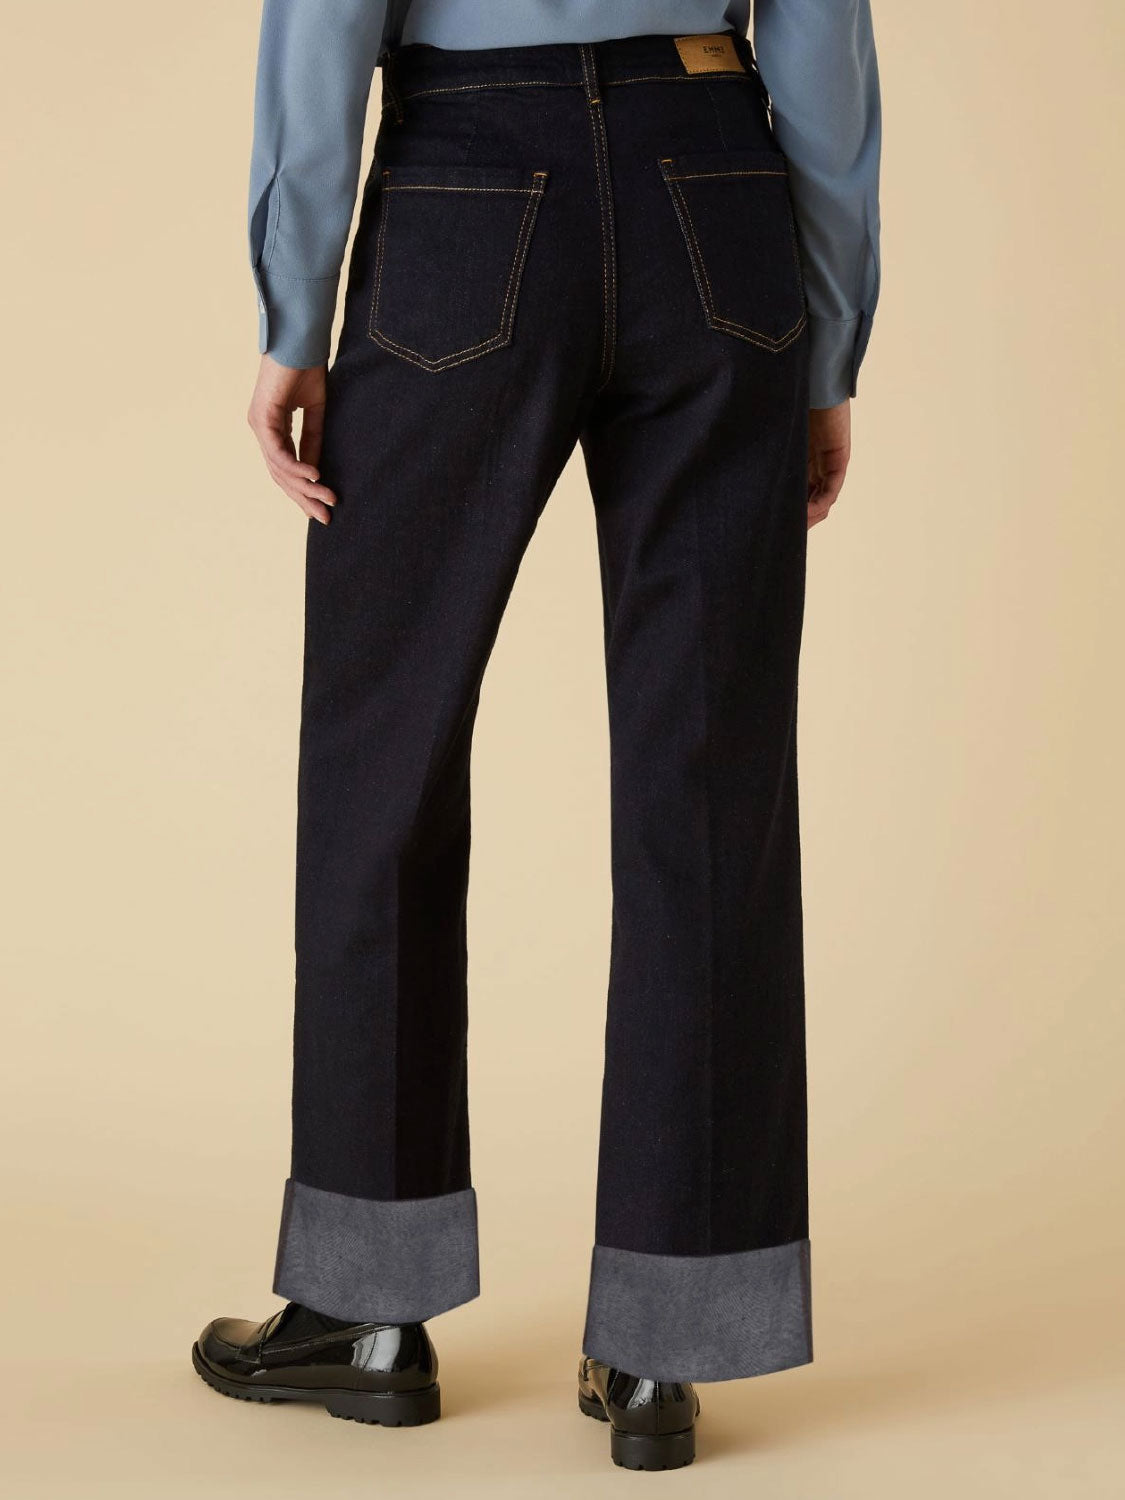 Jeans Emme Marella wide leg - Premium JEANS from EMME MARELLA - Just €89.90! Shop now at Amaltea